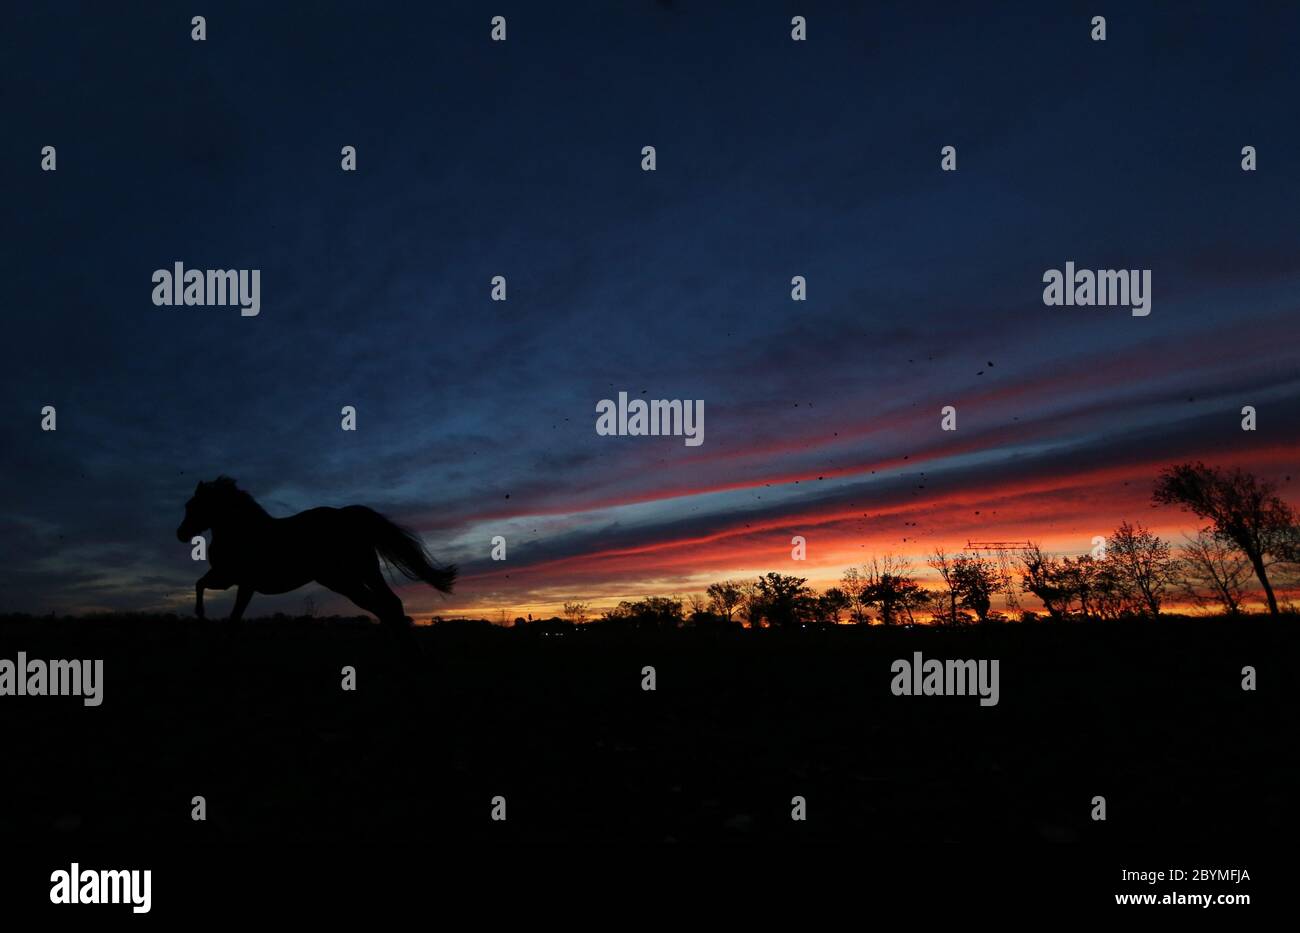 26.10.2019, Neuenhagen, Brandenburg, Germany - Silhouette: Horse at dawn galloping in a paddock. 00S191026D645CAROEX.JPG [MODEL RELEASE: NOT APPLICABL Stock Photo